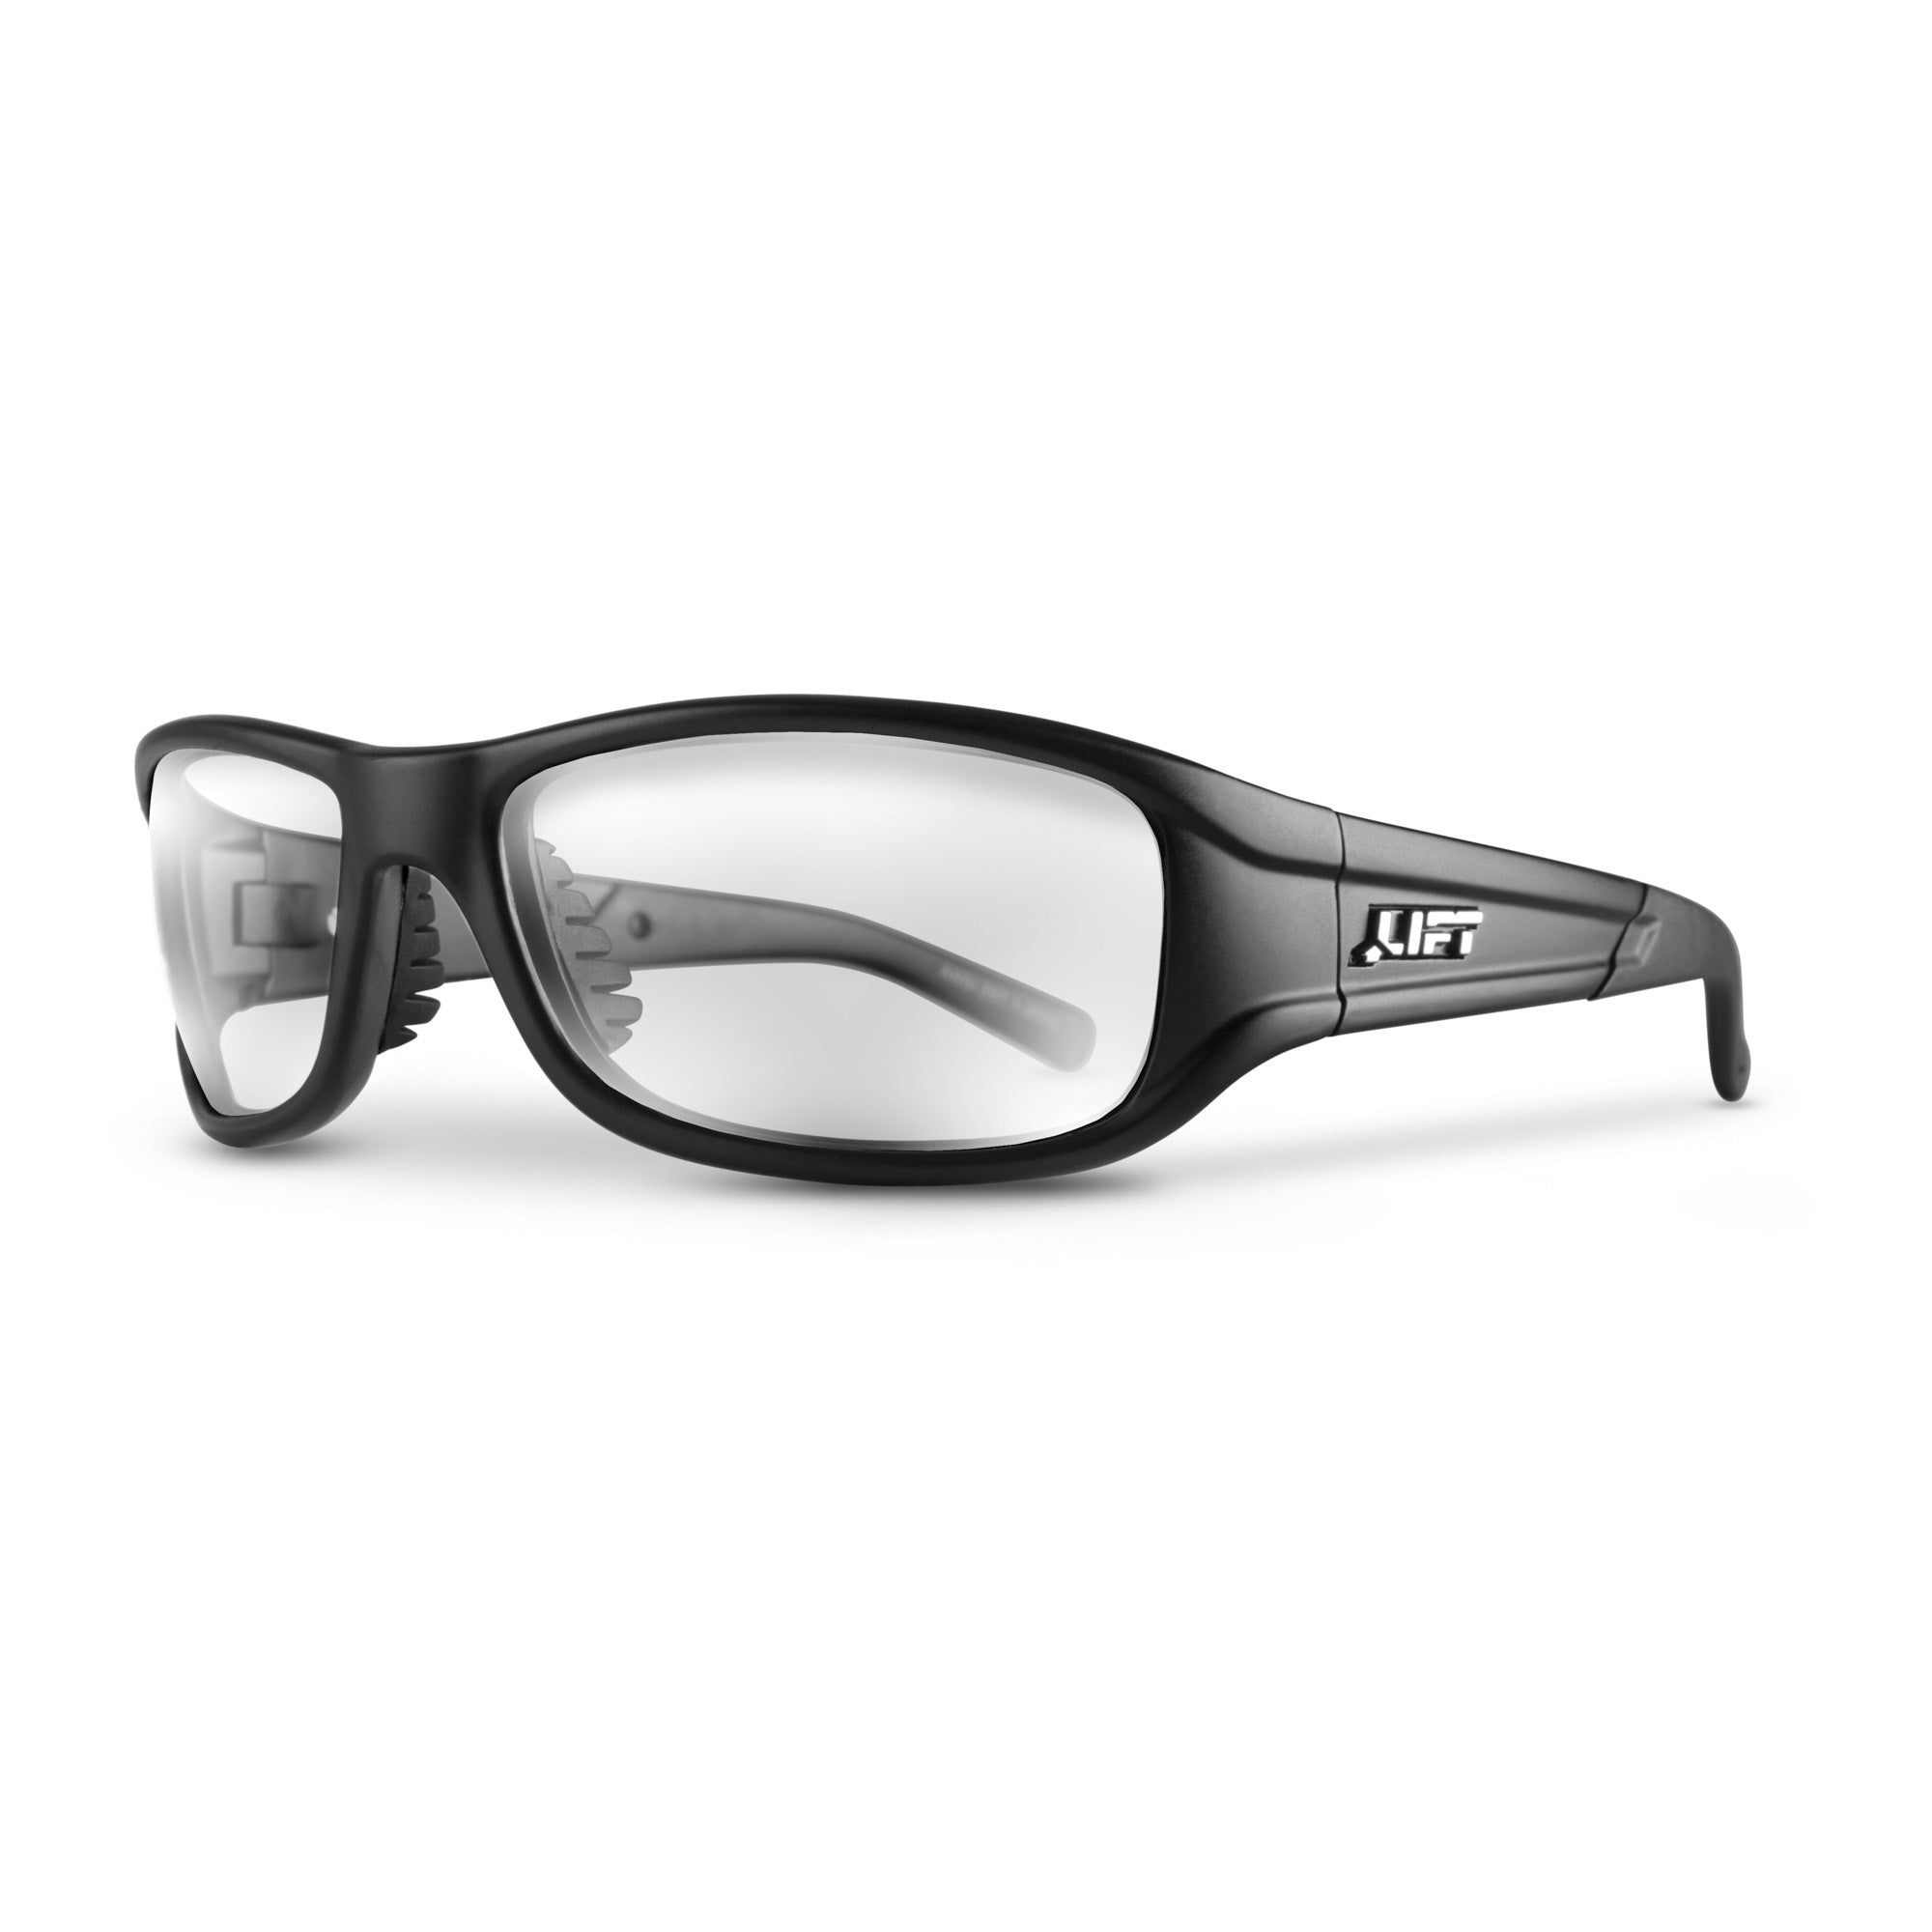 LIFT Safety - ALIAS Safety Glasses - Matte Black